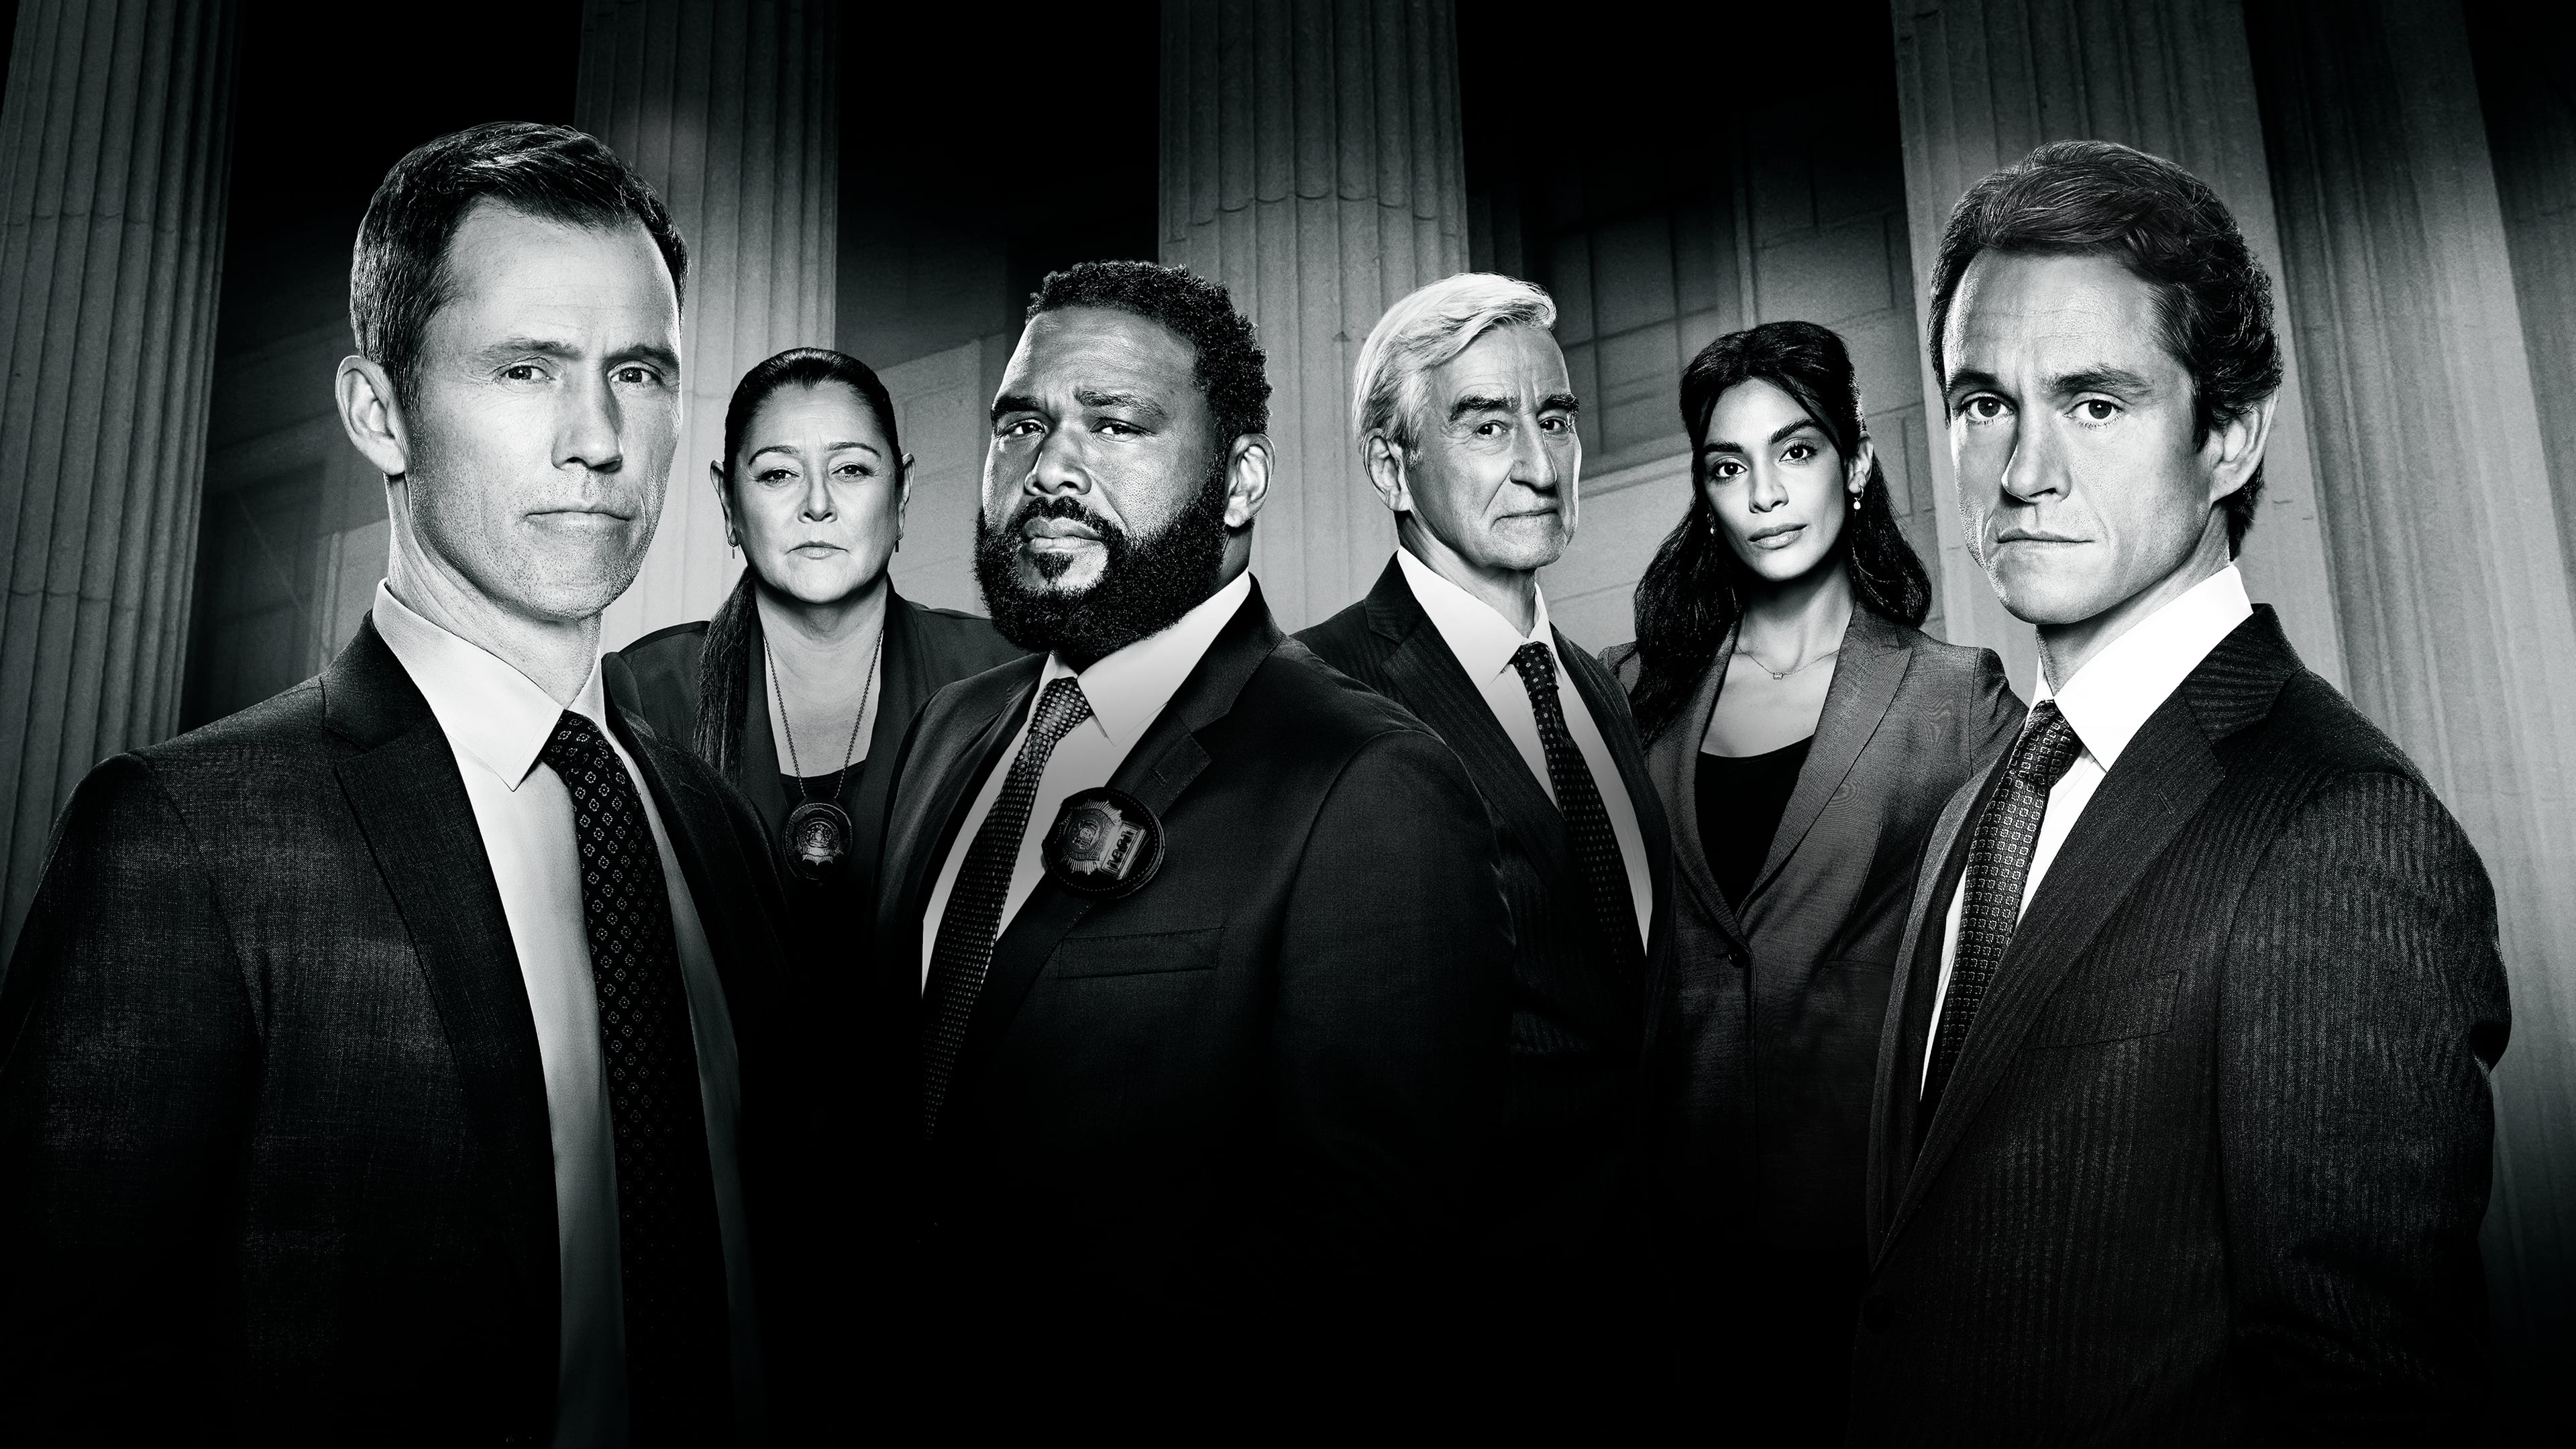 Law & Order - Season 23 Episode 12